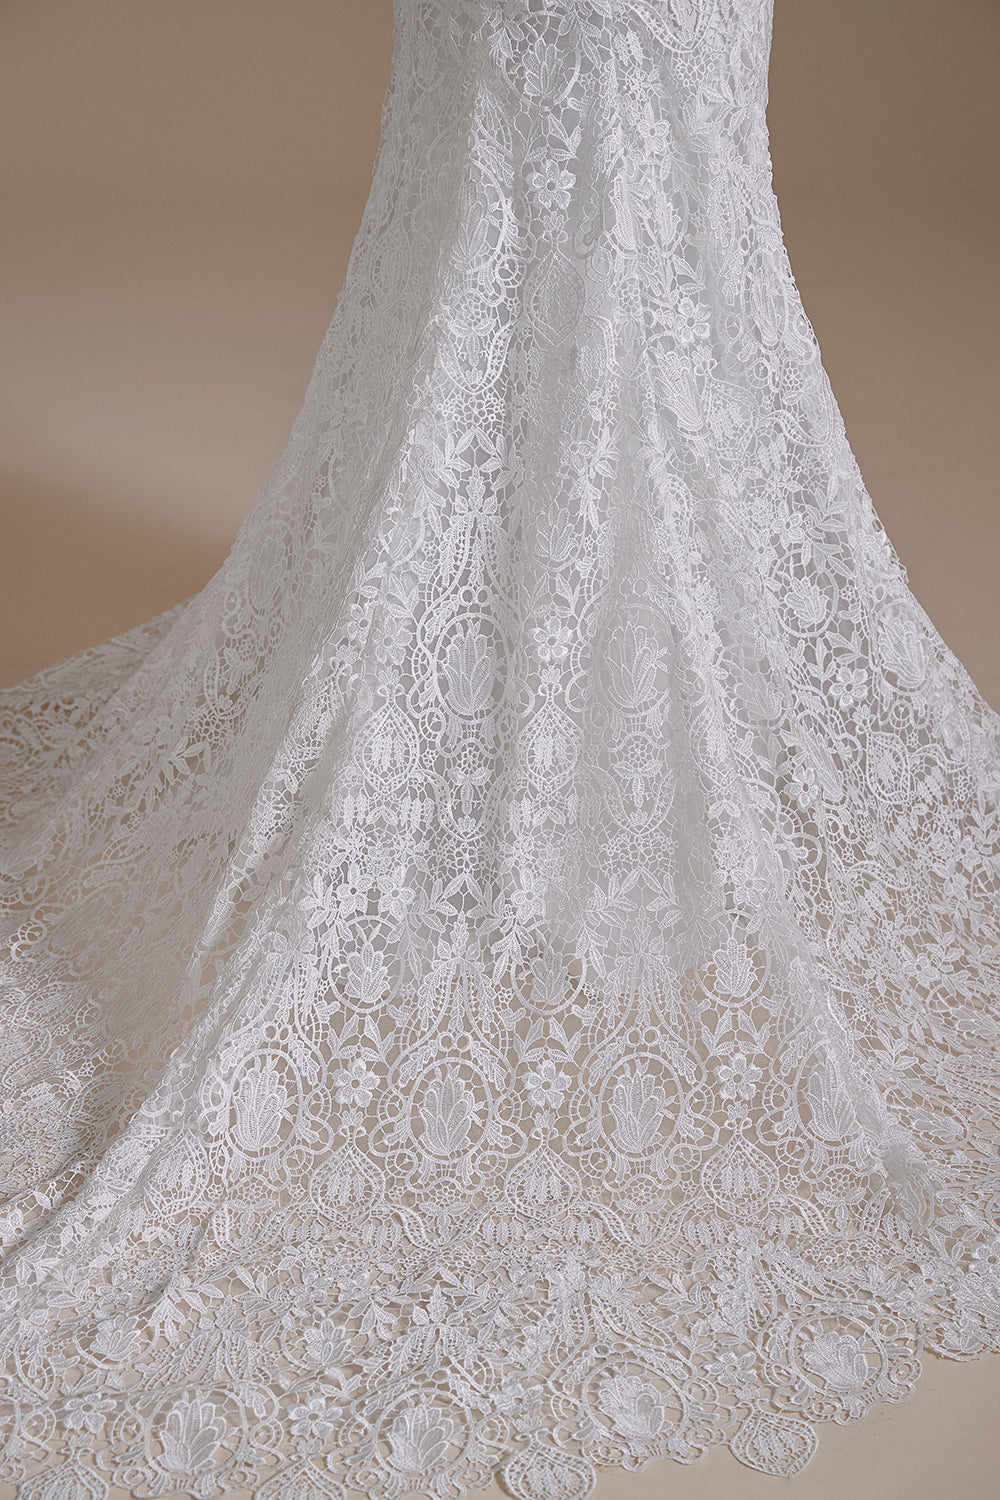 Zapaka Women White Church Wedding Dress Mermaid Halter Open Back Floor  Length Bridal Dress – ZAPAKA